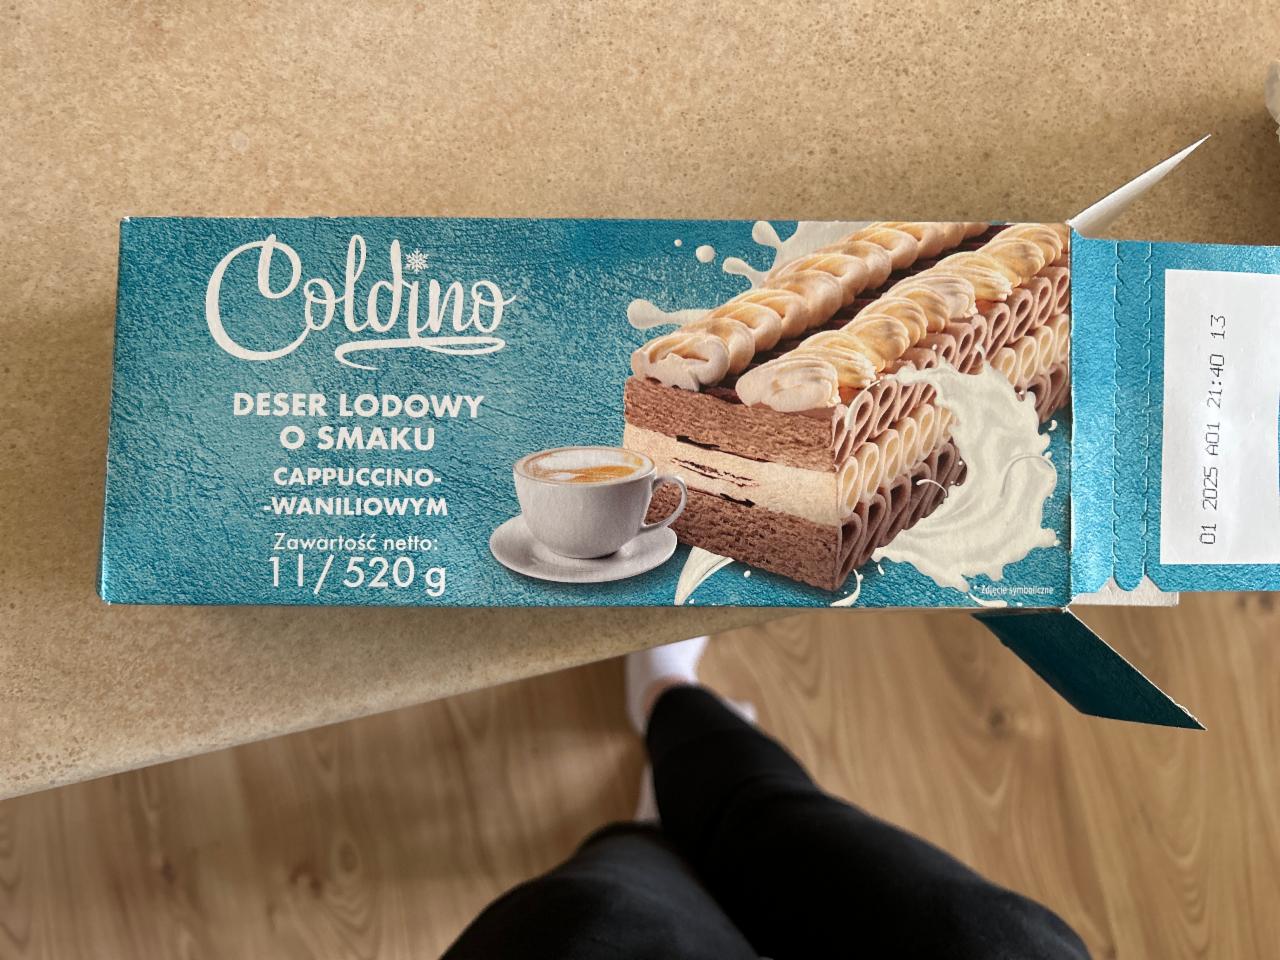 Фото - замороженый десерт со вкусом капучино и ванили Coldino